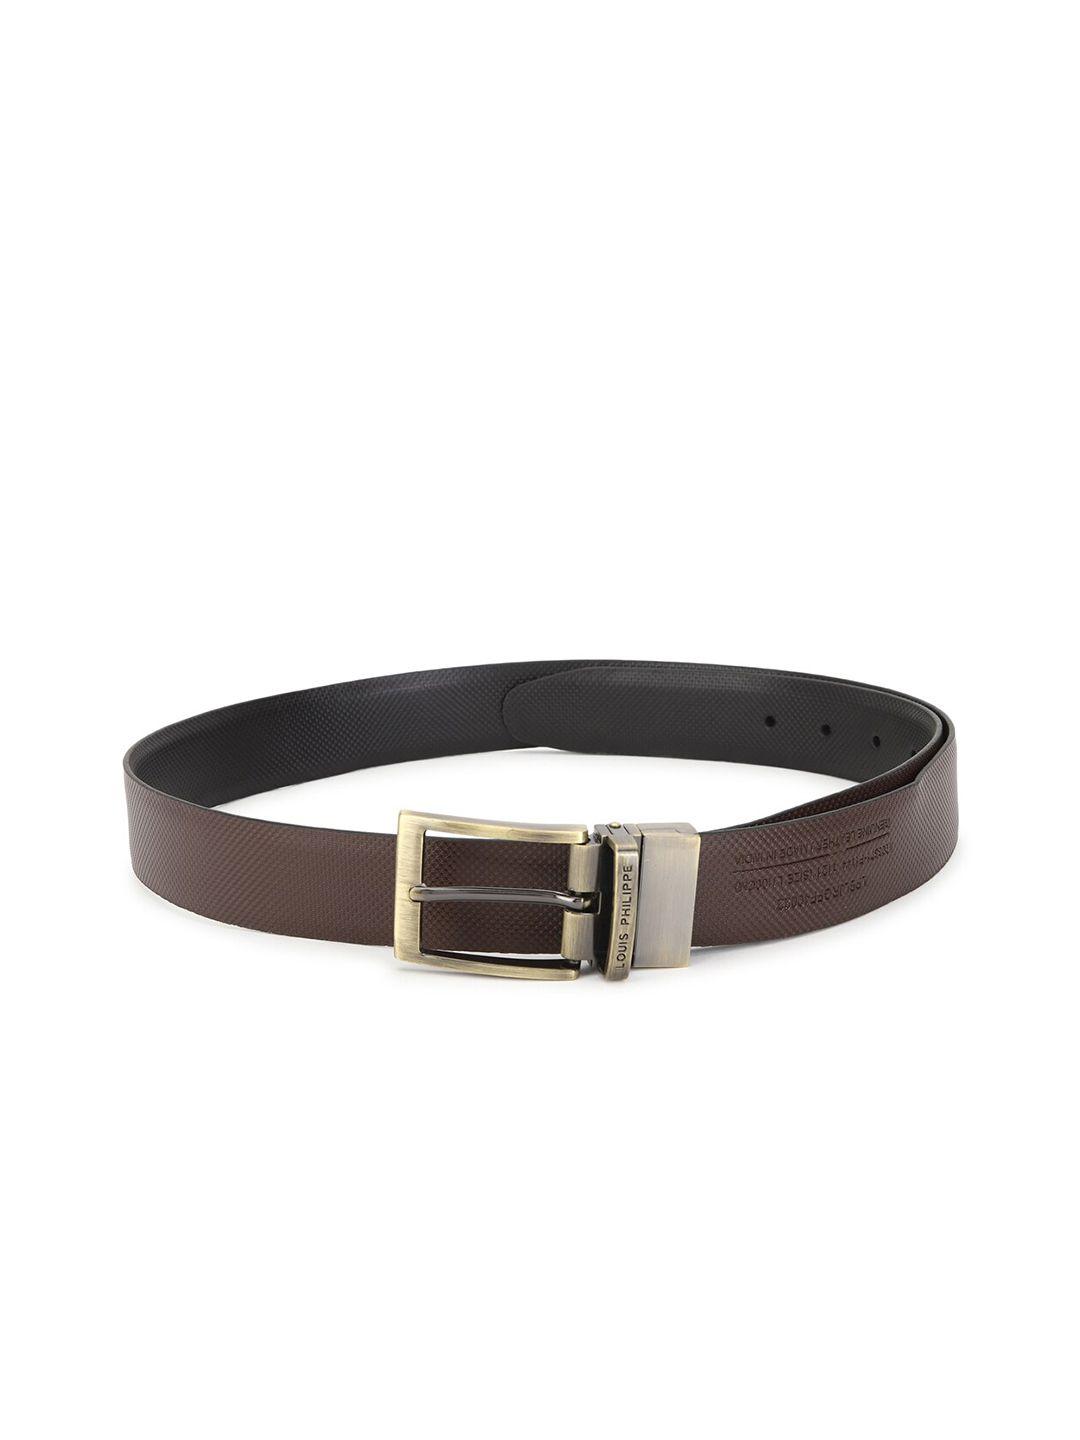 louis philippe men black & brown textured reversible leather belt